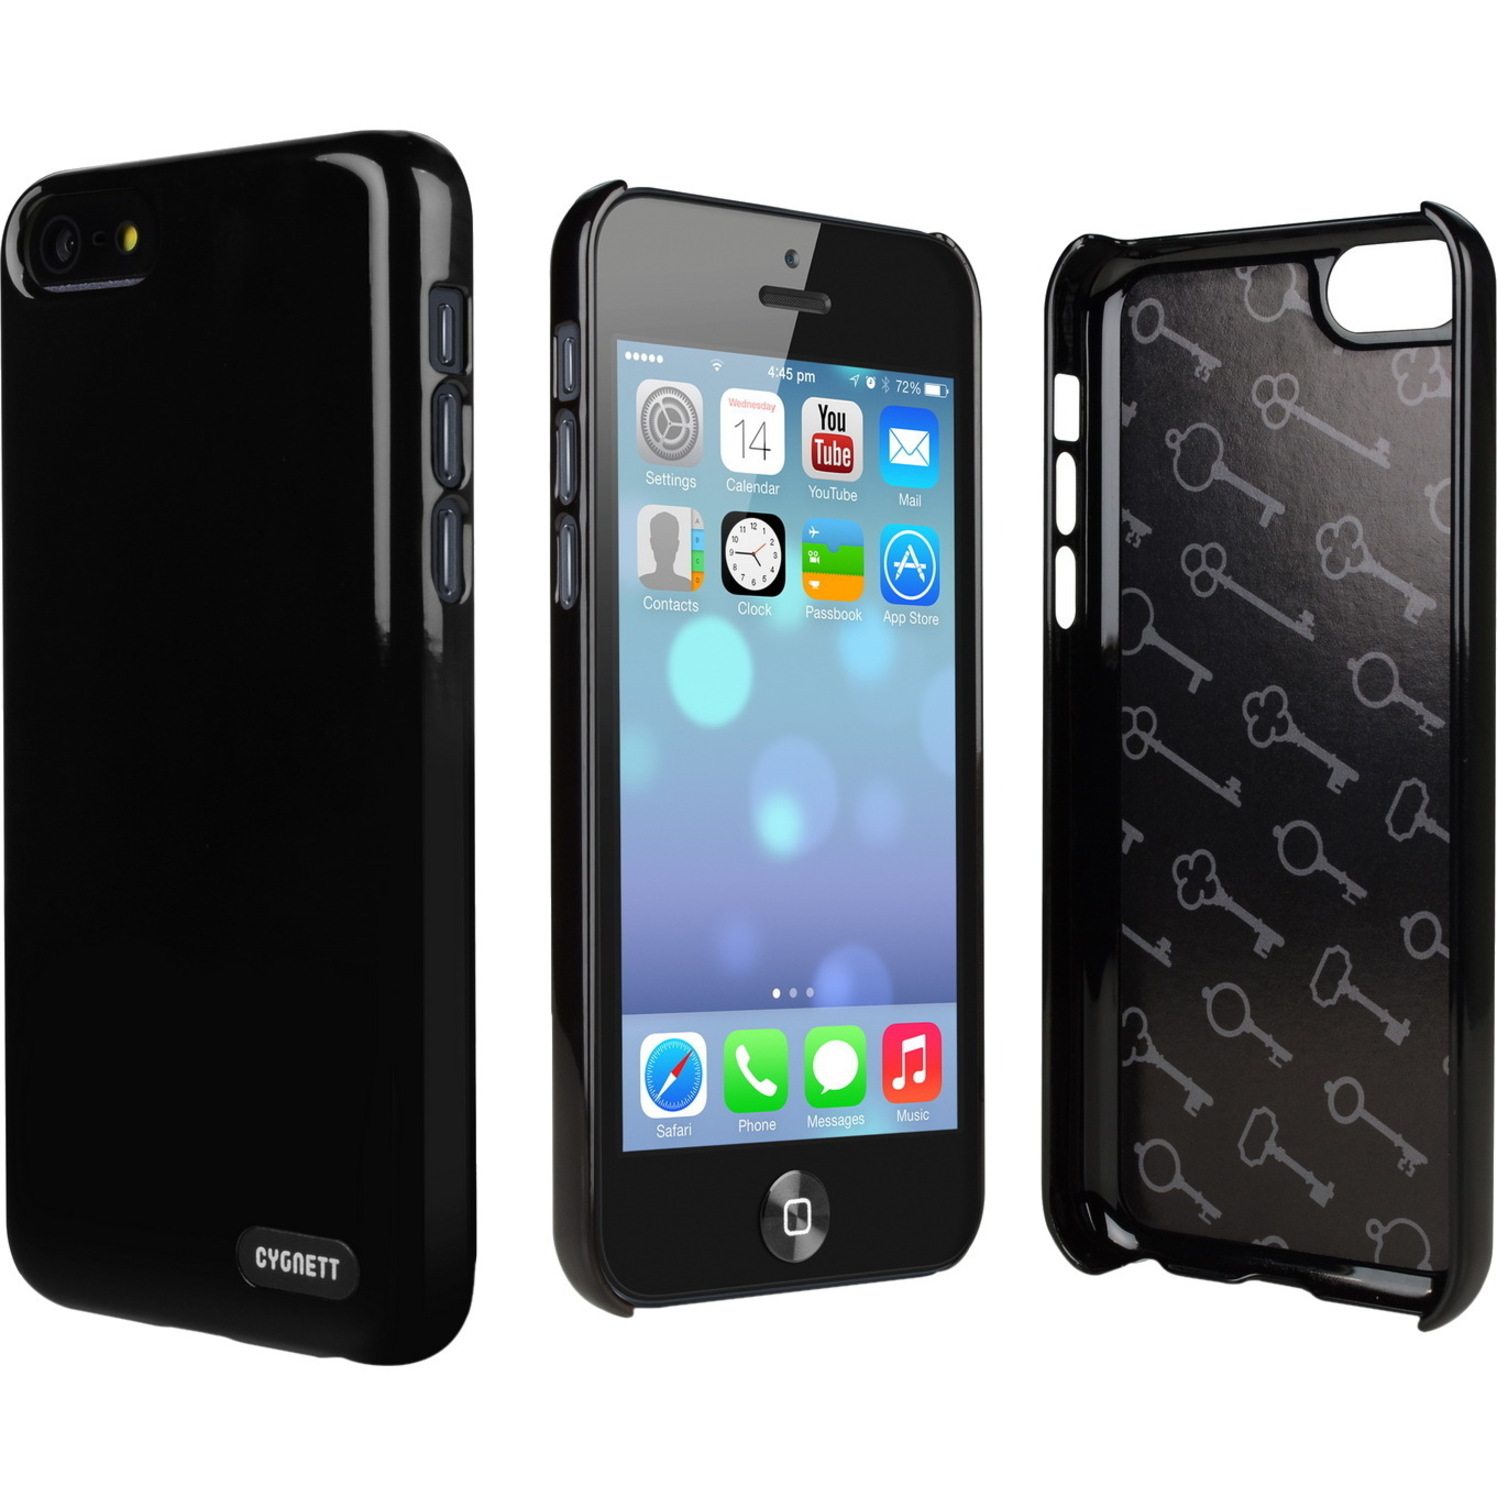 Cygnett Black Form Hard Plastic case iPhone 5C - image 1 of 2